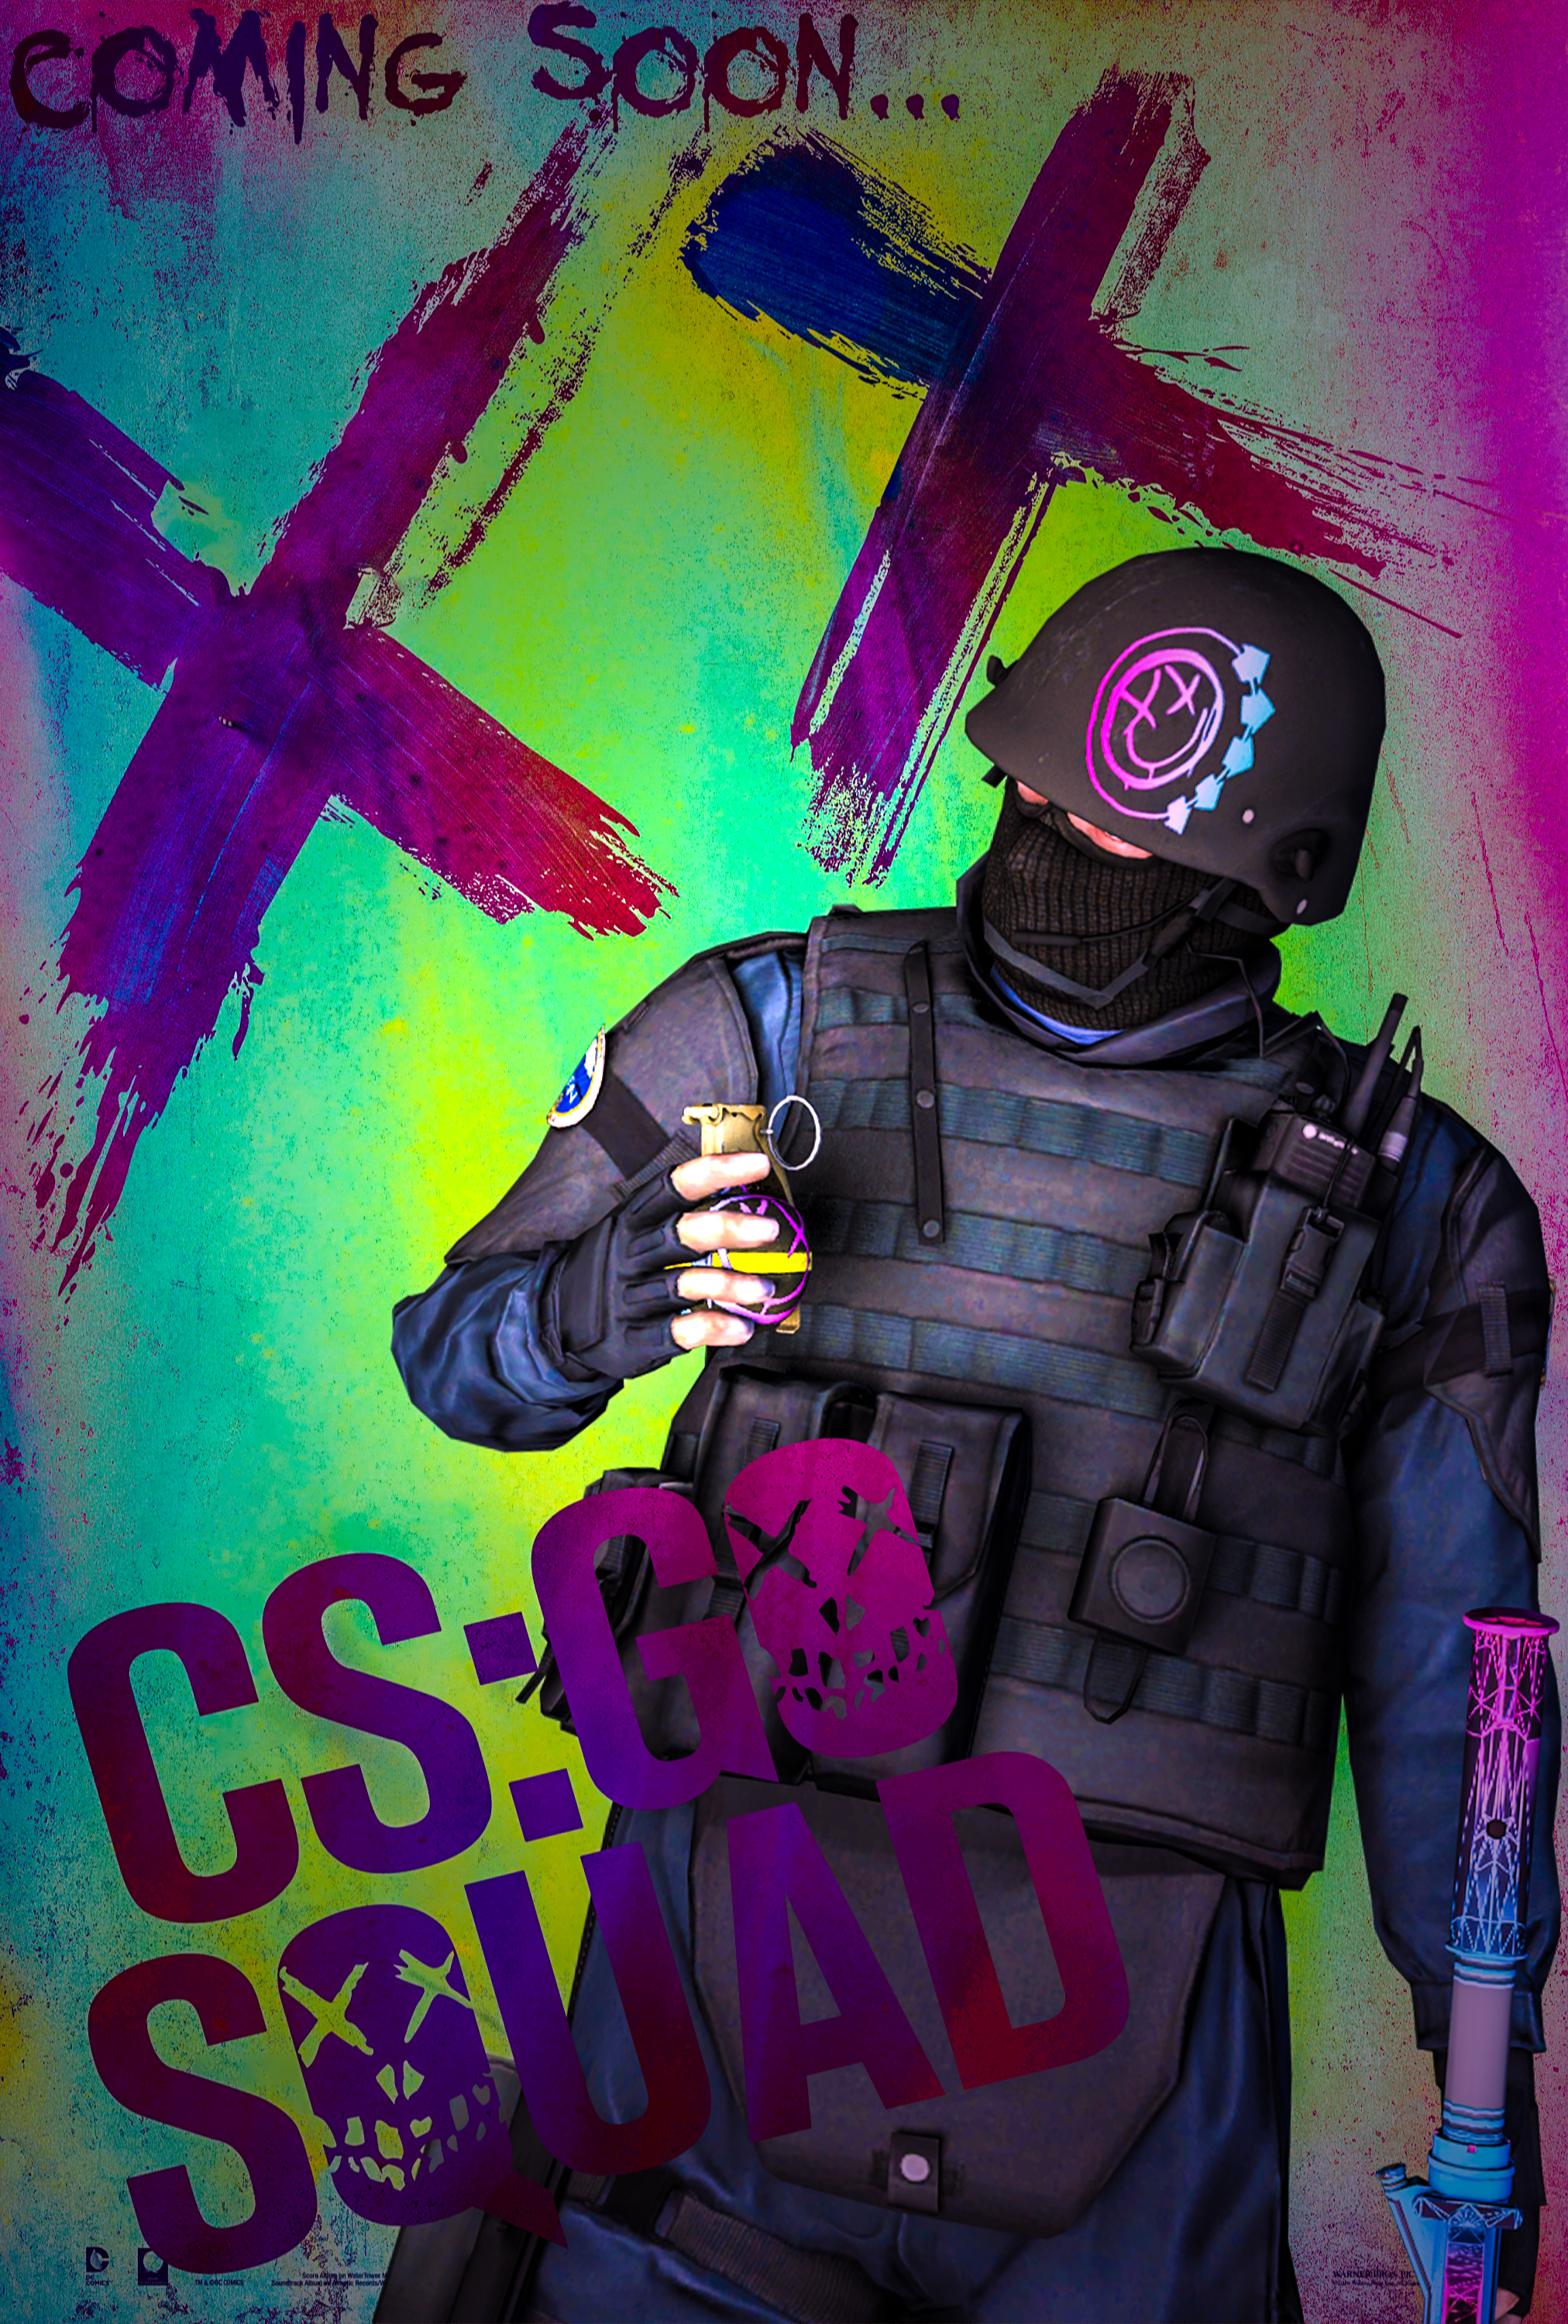 Counter-Strike: Global Offensive Art by Listenshow